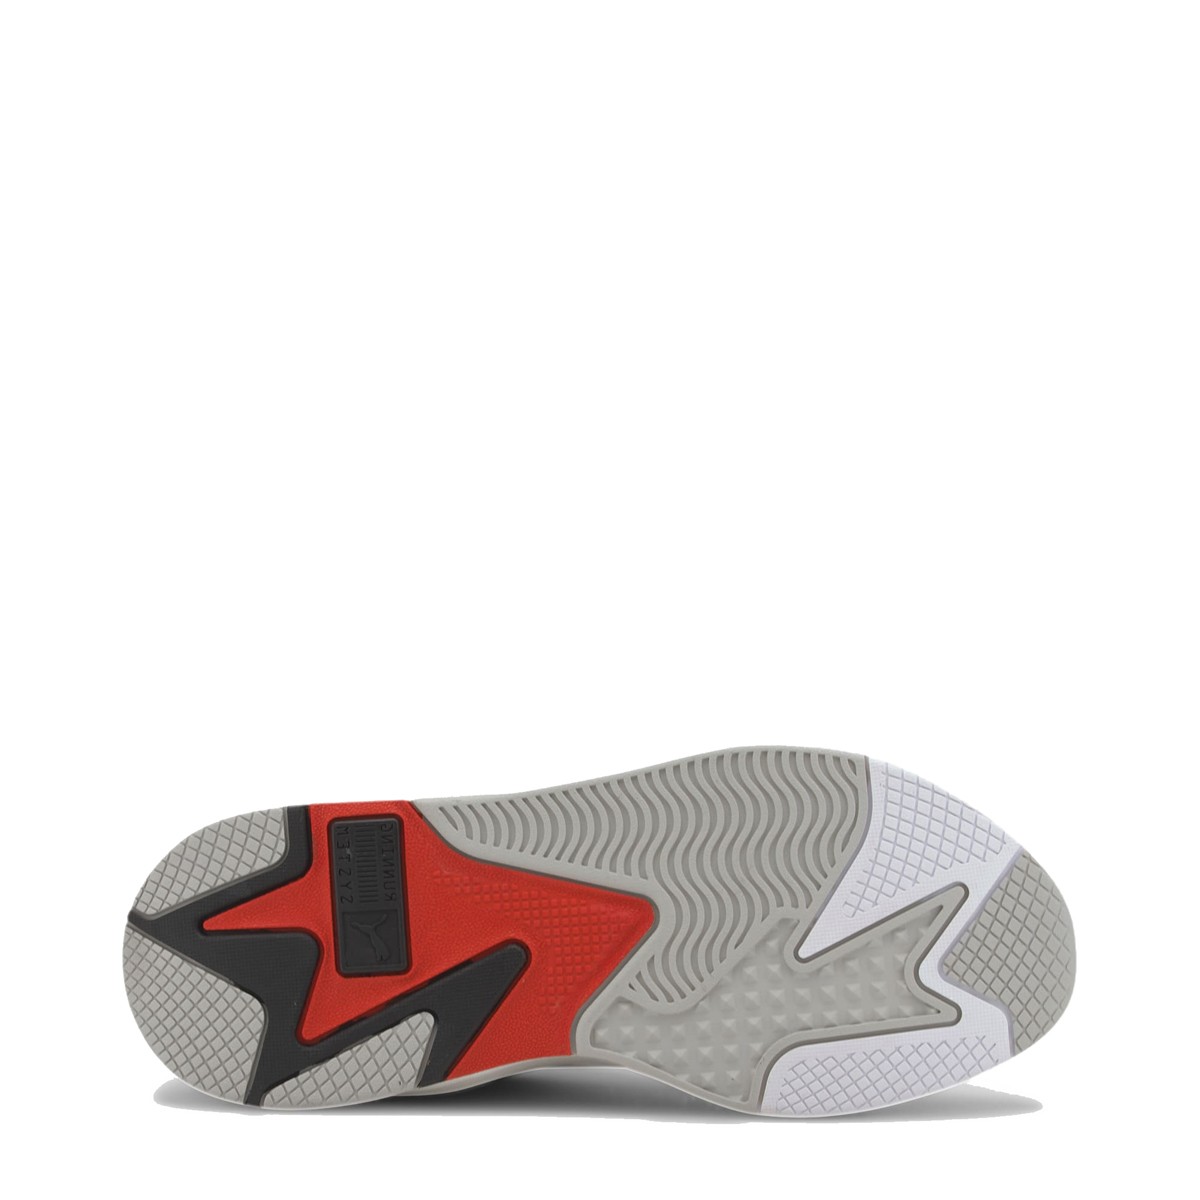 Puma RS-X Millenium Erkek Ayakkabısı 373236-02